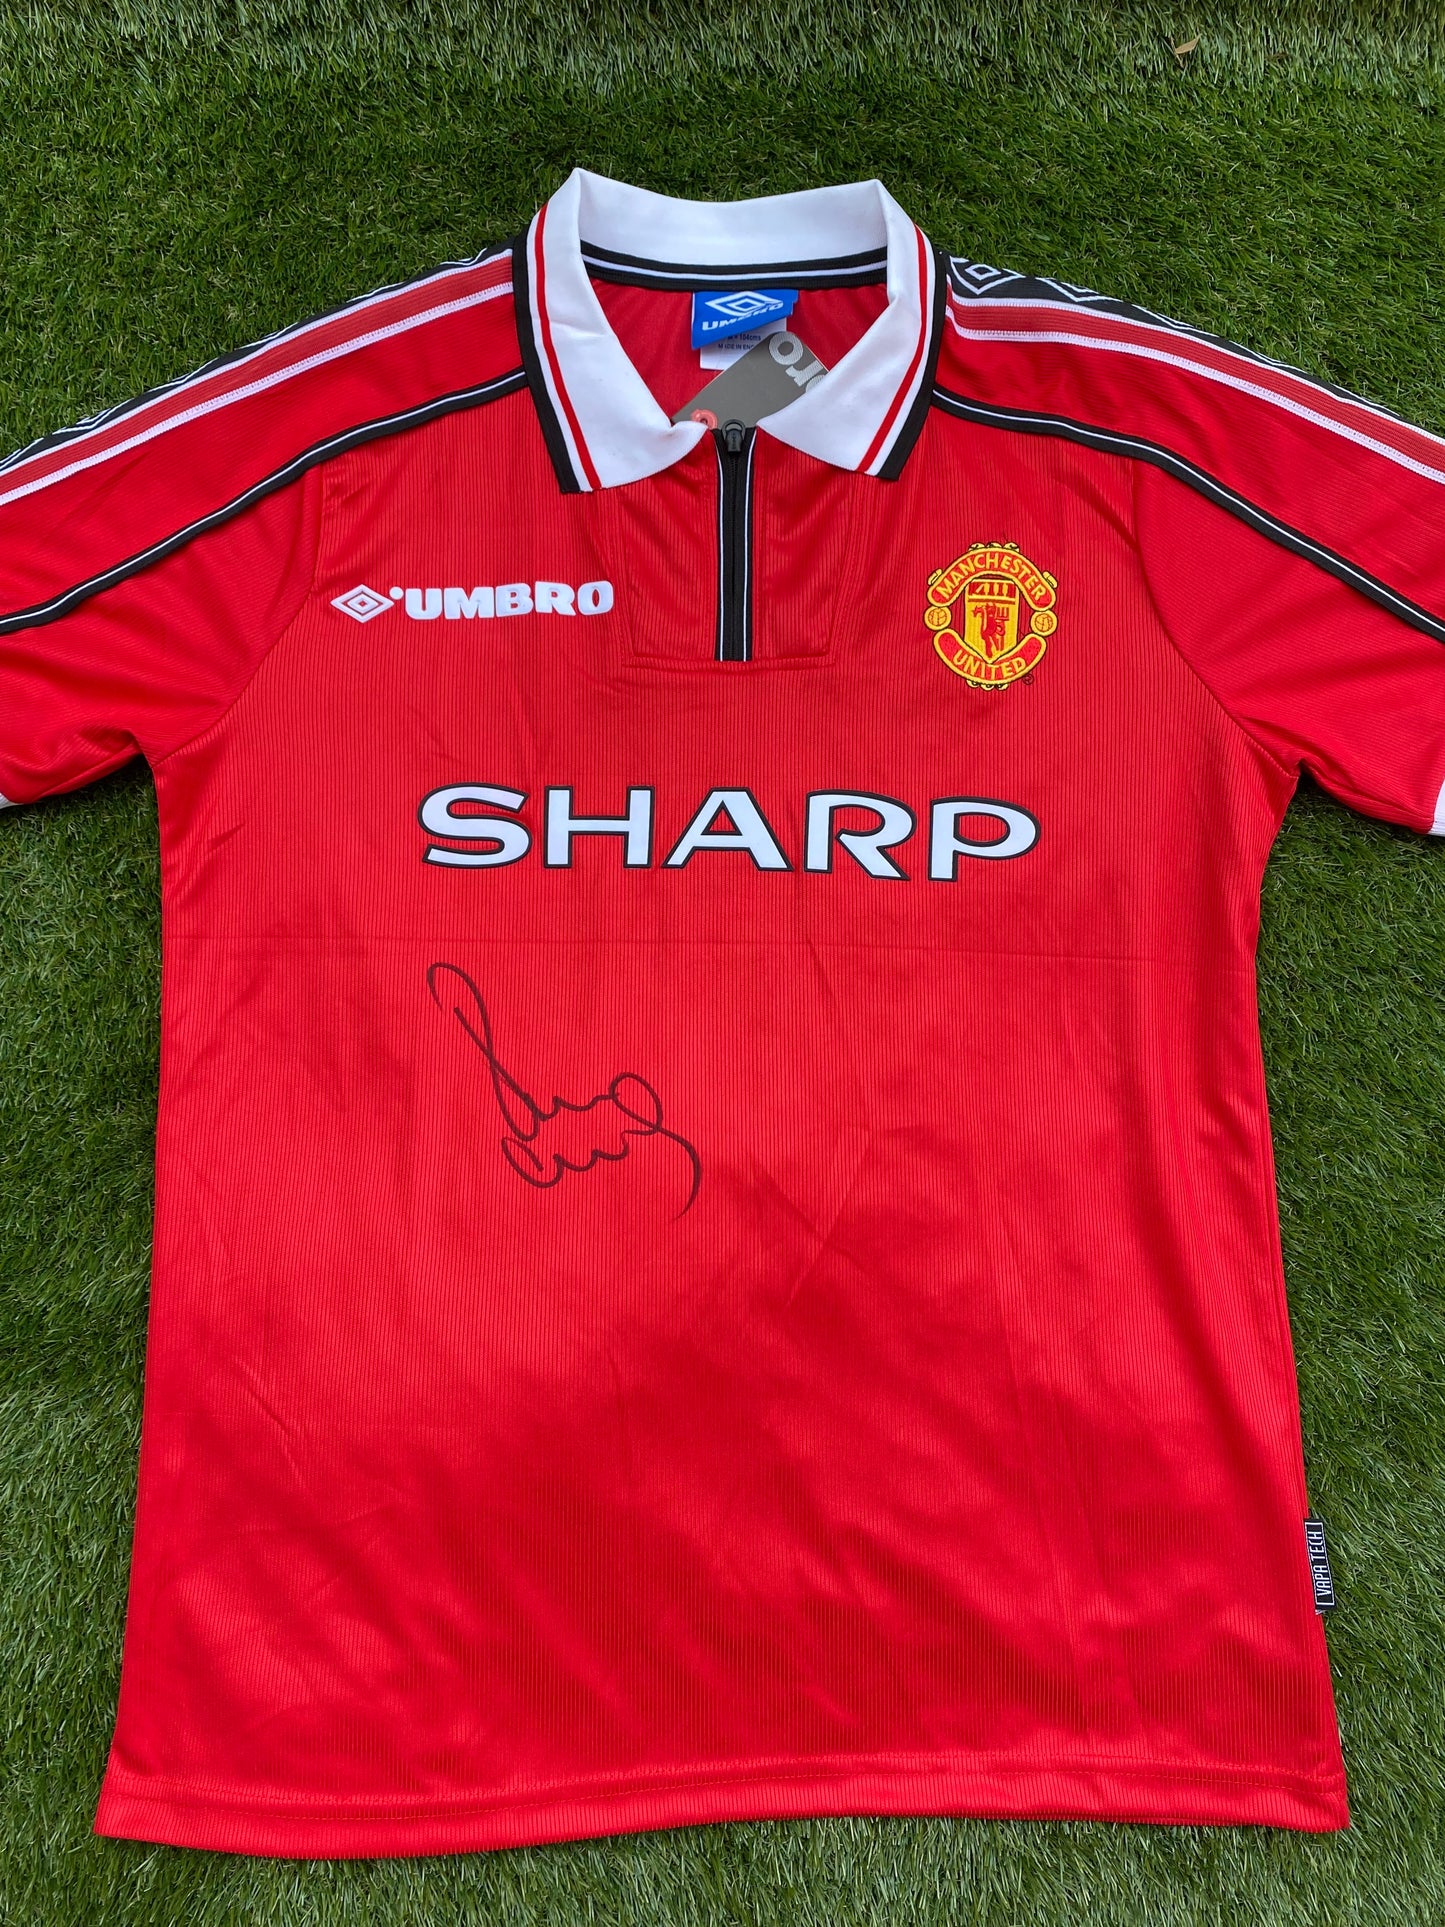 Paul Scholes - Manchester United - hand-signed replica shirt - MUFC memorabilia, football shirt (UNFRAMED)